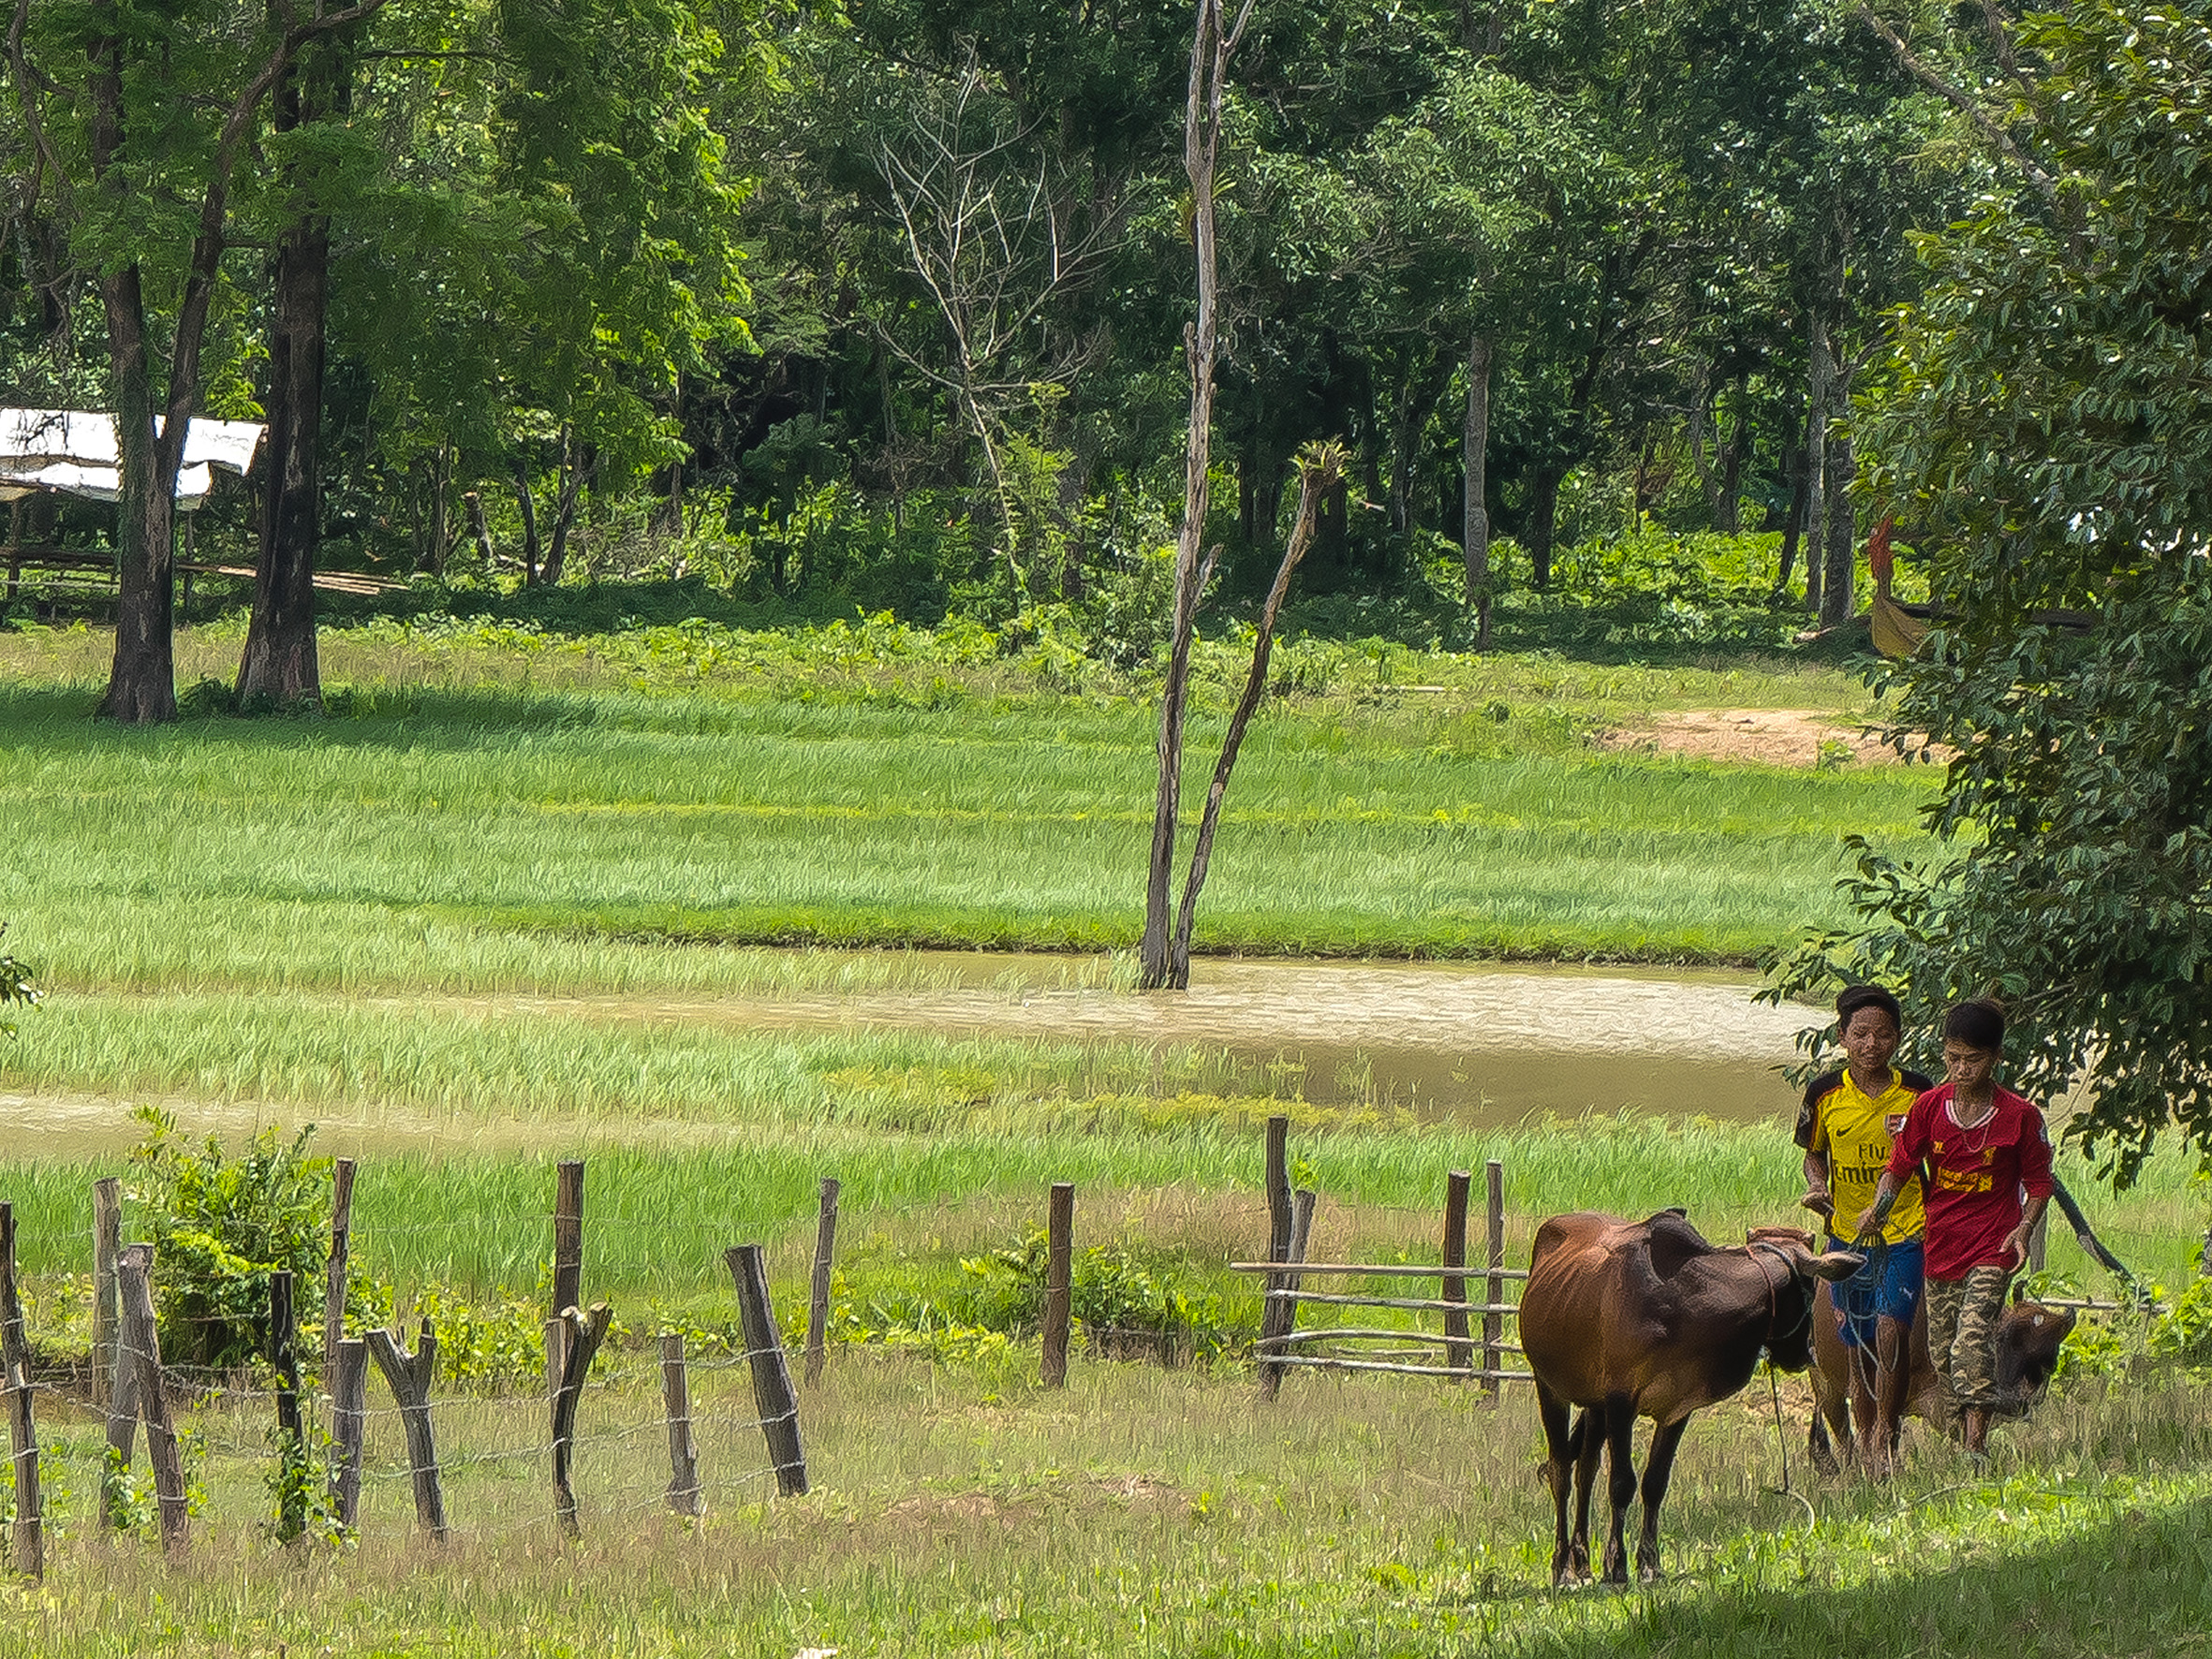 Team walking through grassland in Laos to detect landmines